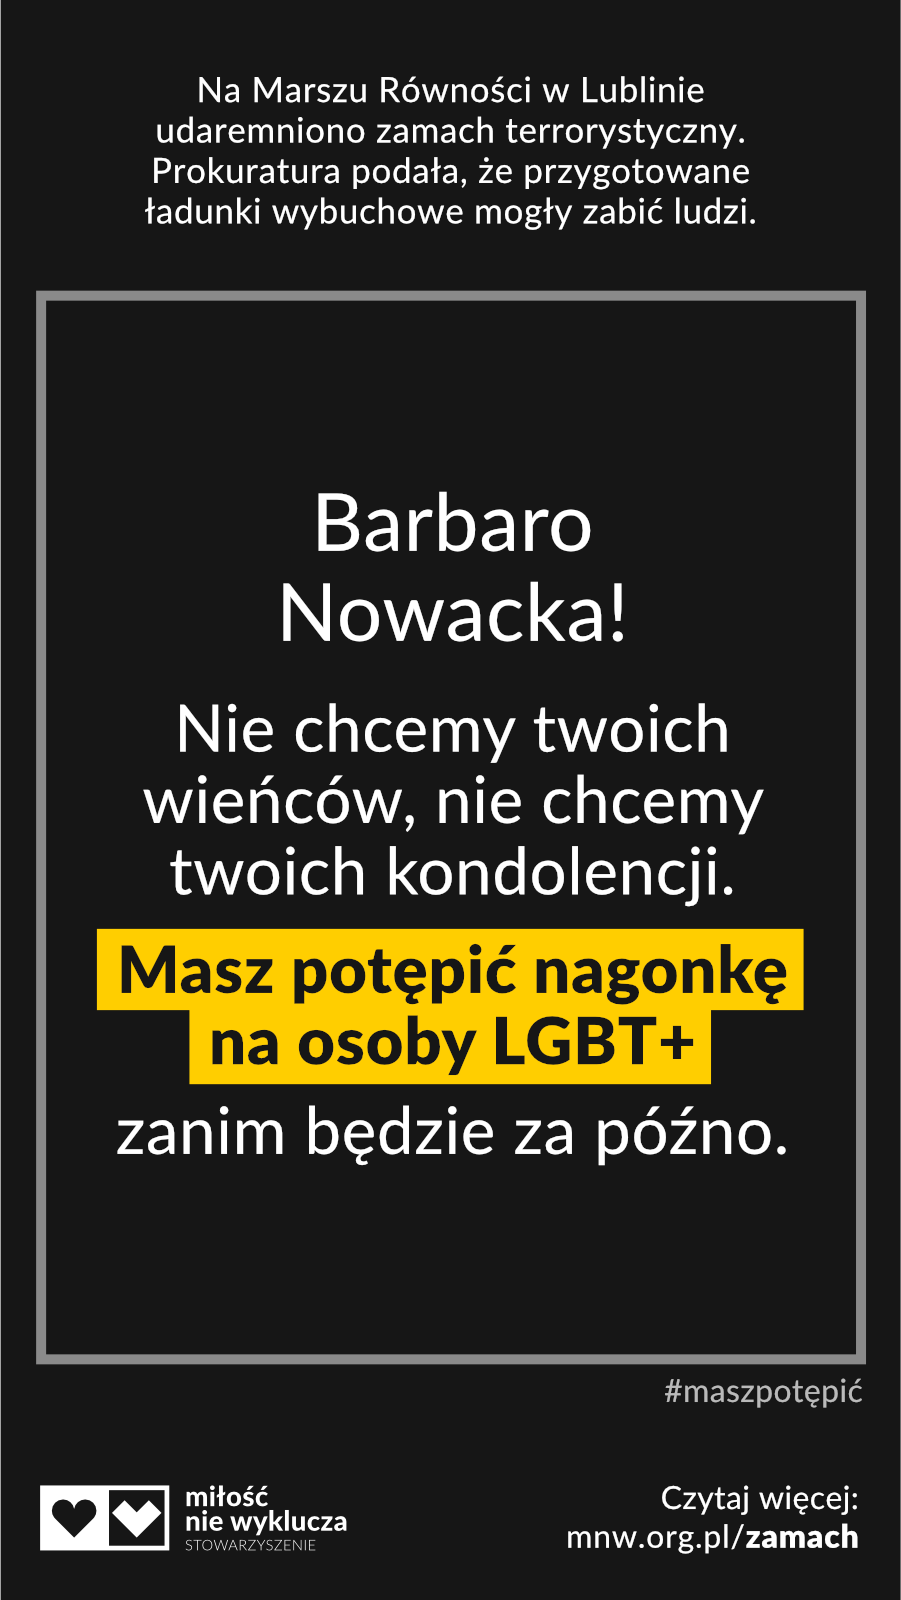 Barbara Nowacka #maszpotepic zamach LGBT+